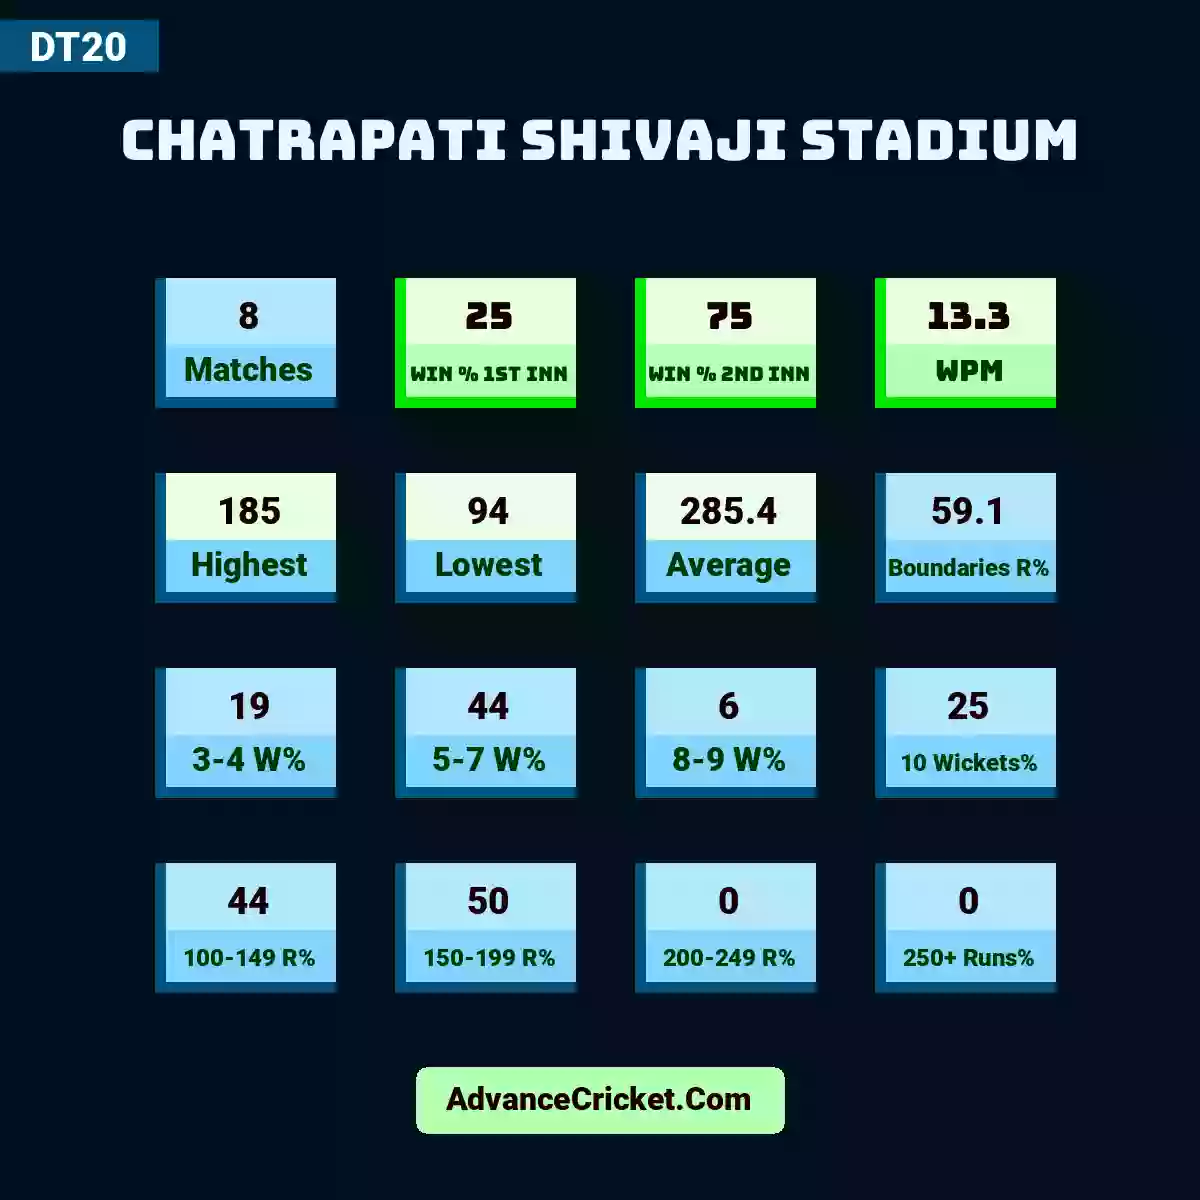 Image showing Chatrapati Shivaji Stadium with Matches: 8, Win % 1st Inn: 25, Win % 2nd Inn: 75, WPM: 13.3, Highest: 185, Lowest: 94, Average: 285.4, Boundaries R%: 59.1, 3-4 W%: 19, 5-7 W%: 44, 8-9 W%: 6, 10 Wickets%: 25, 100-149 R%: 44, 150-199 R%: 50, 200-249 R%: 0, 250+ Runs%: 0.